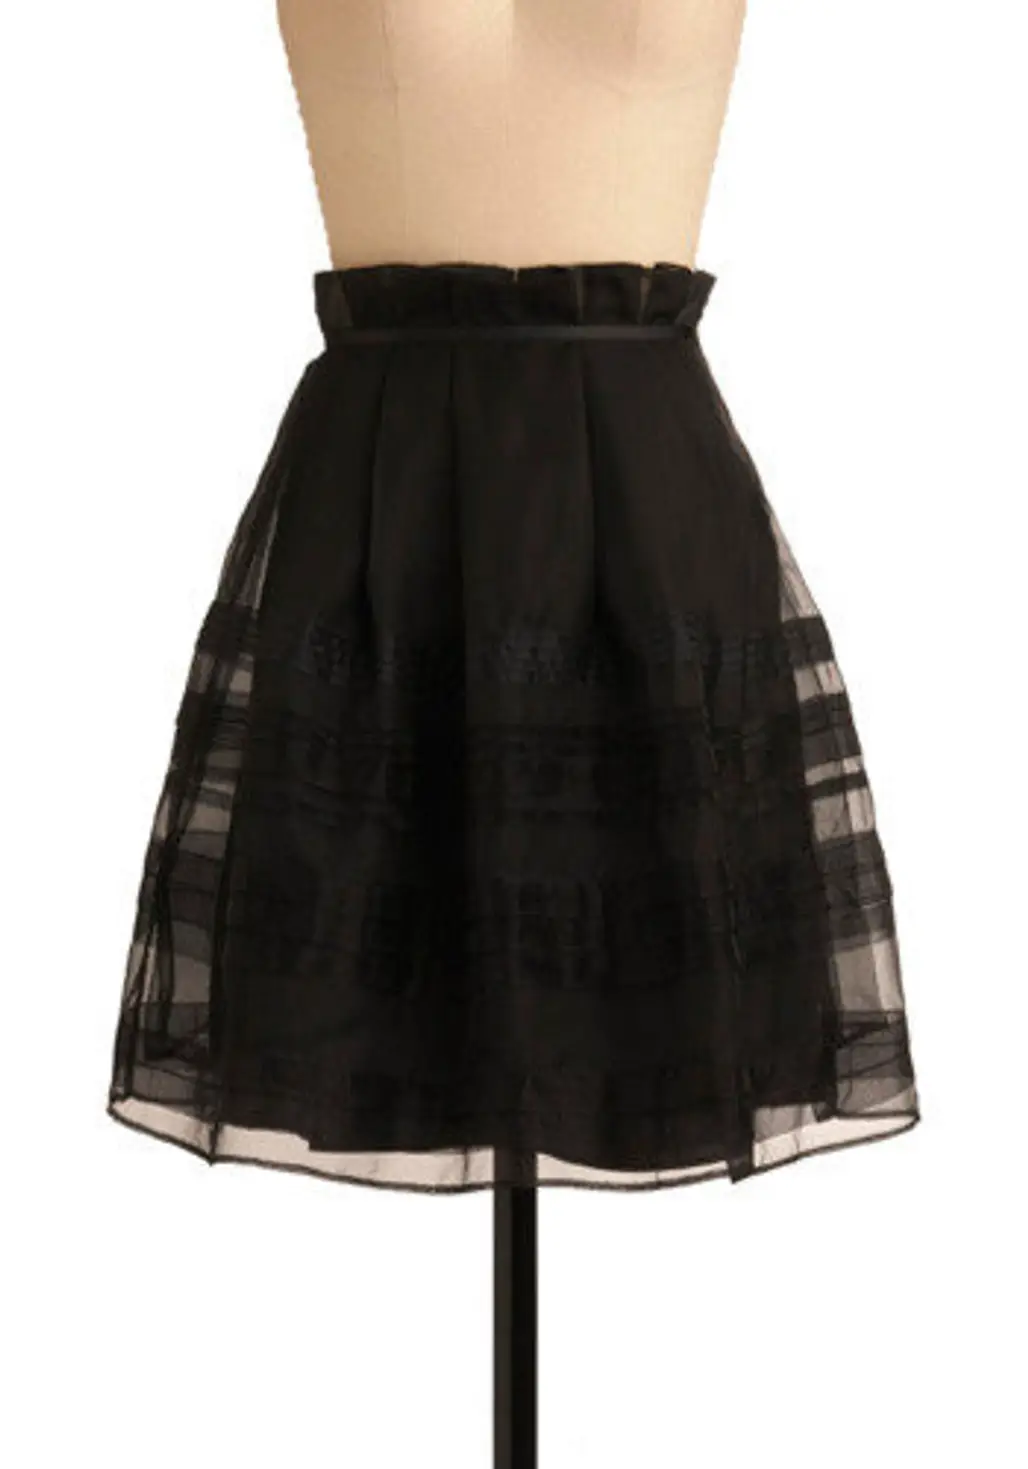 Sweet Treat Skirt in Licorice